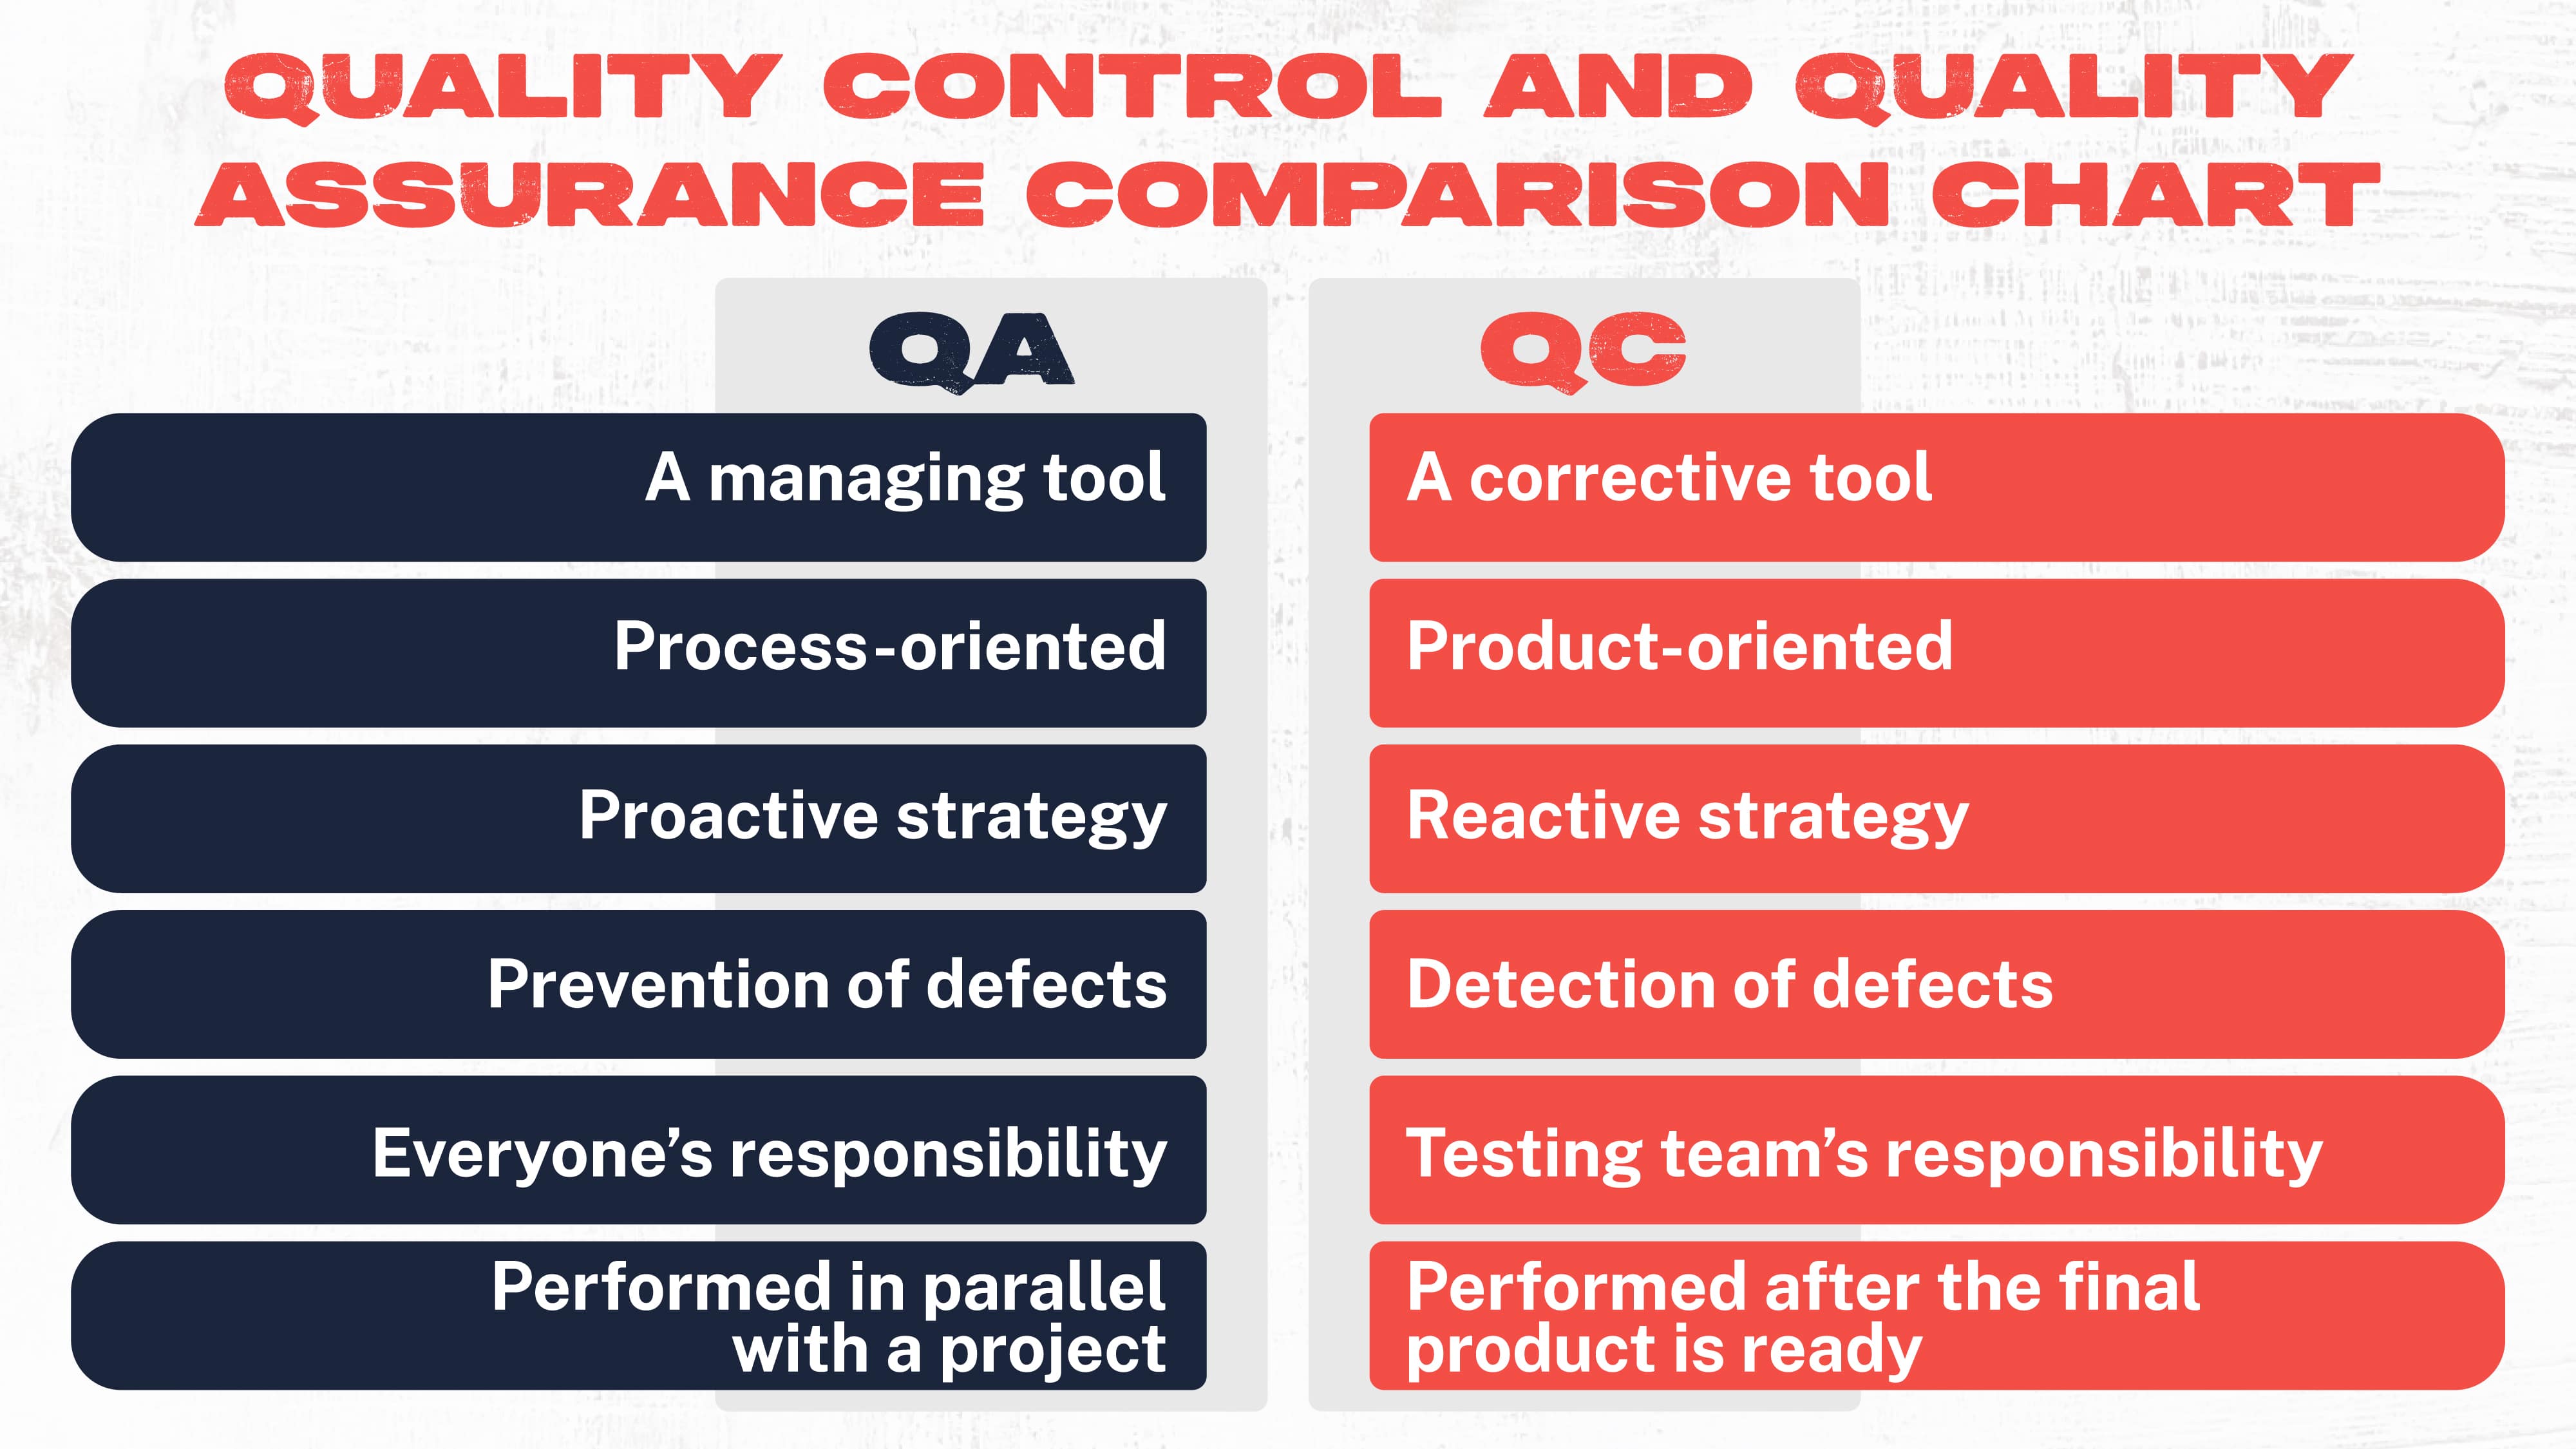 QUALITY CONTROL & QUALITY ASSURANCE COMPARISON CHART